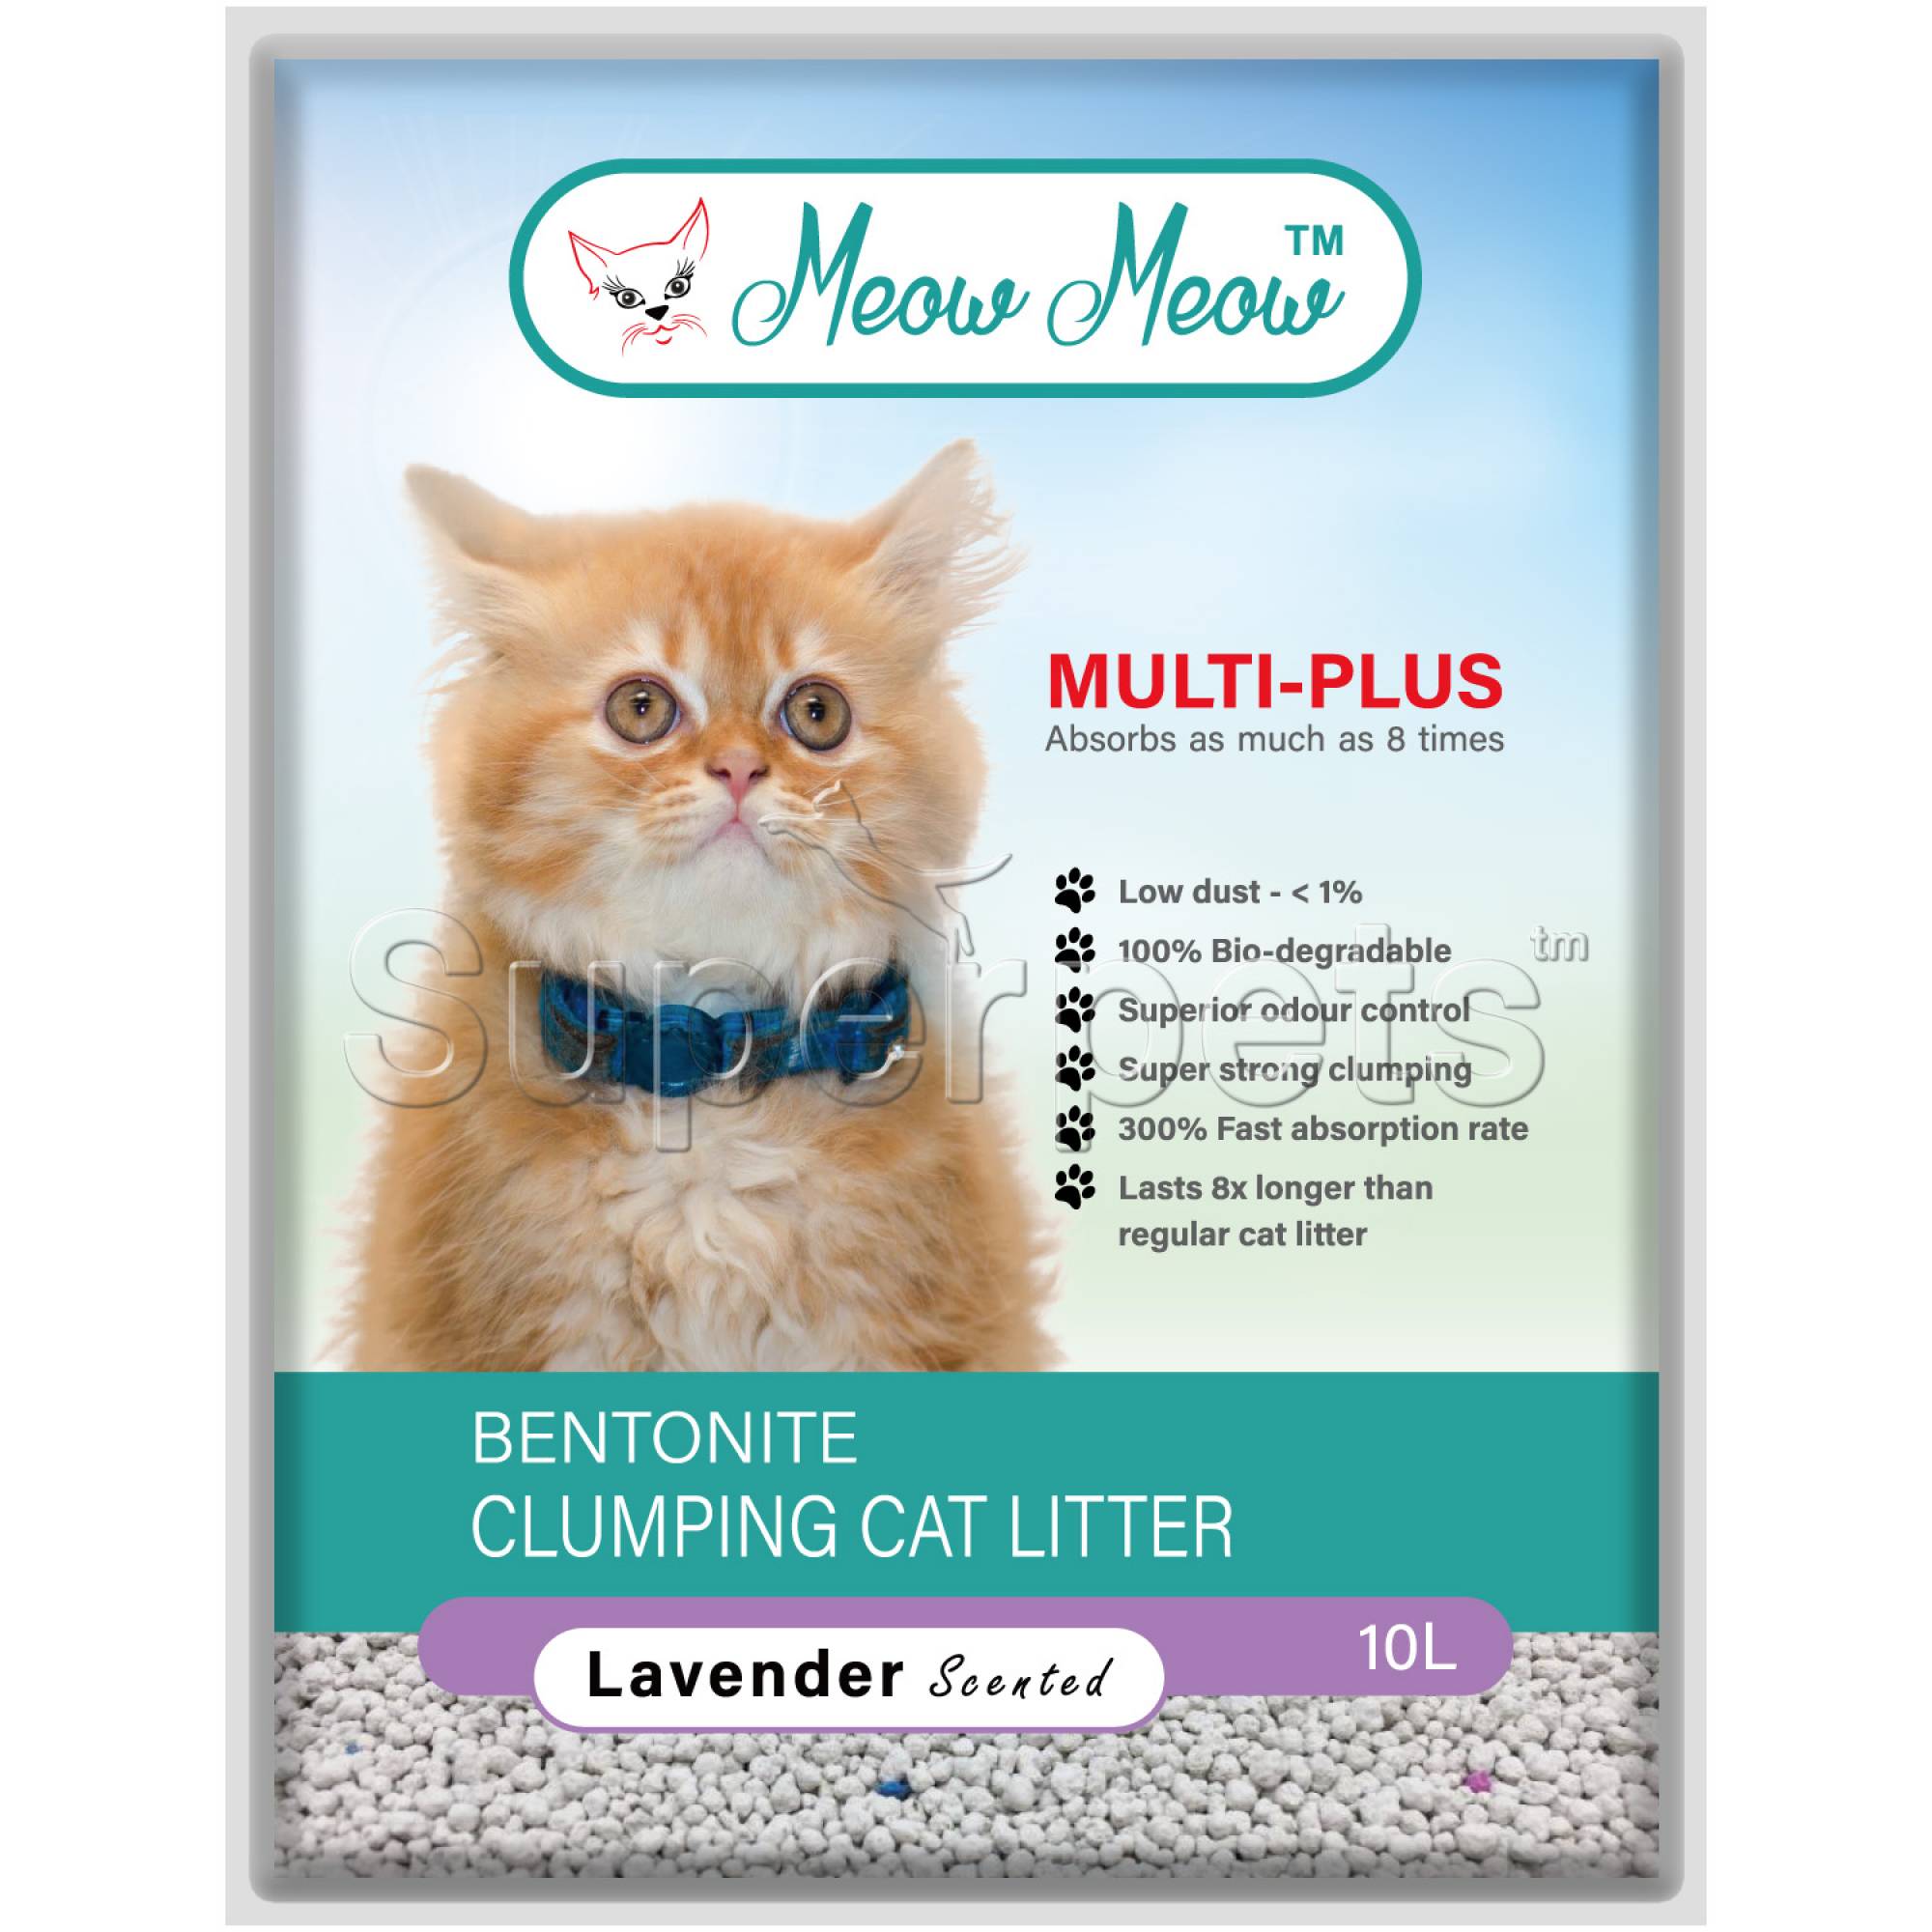 Meow Meow - Multi-Plus Bentonite Cat Litter - Lavender 10L